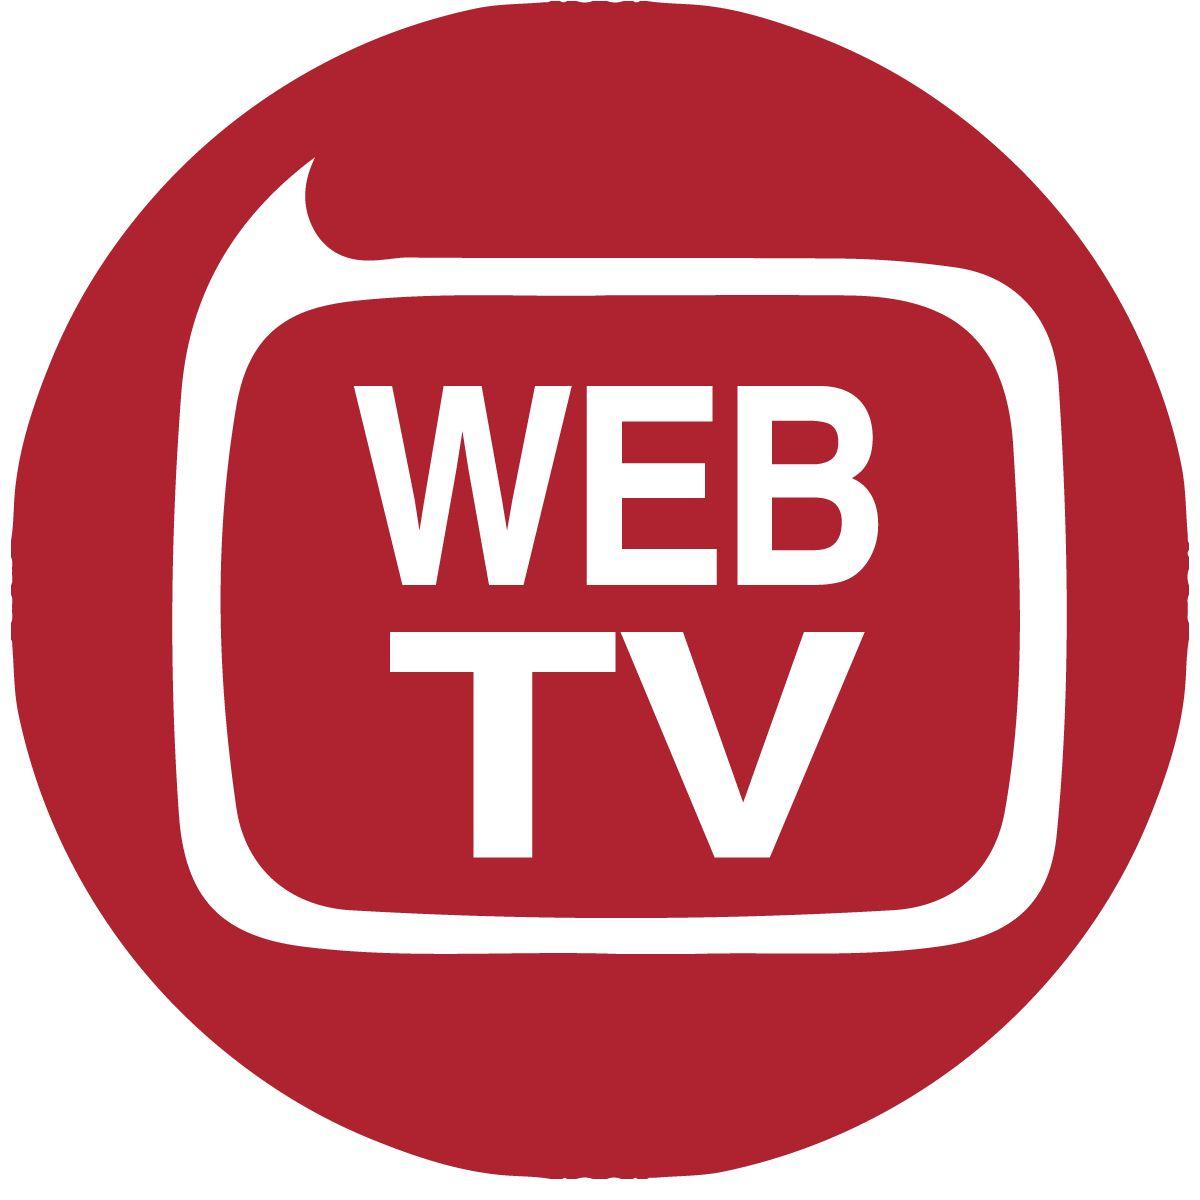 Web TV Logo - Index of /fileadmin/user_upload/img/logos